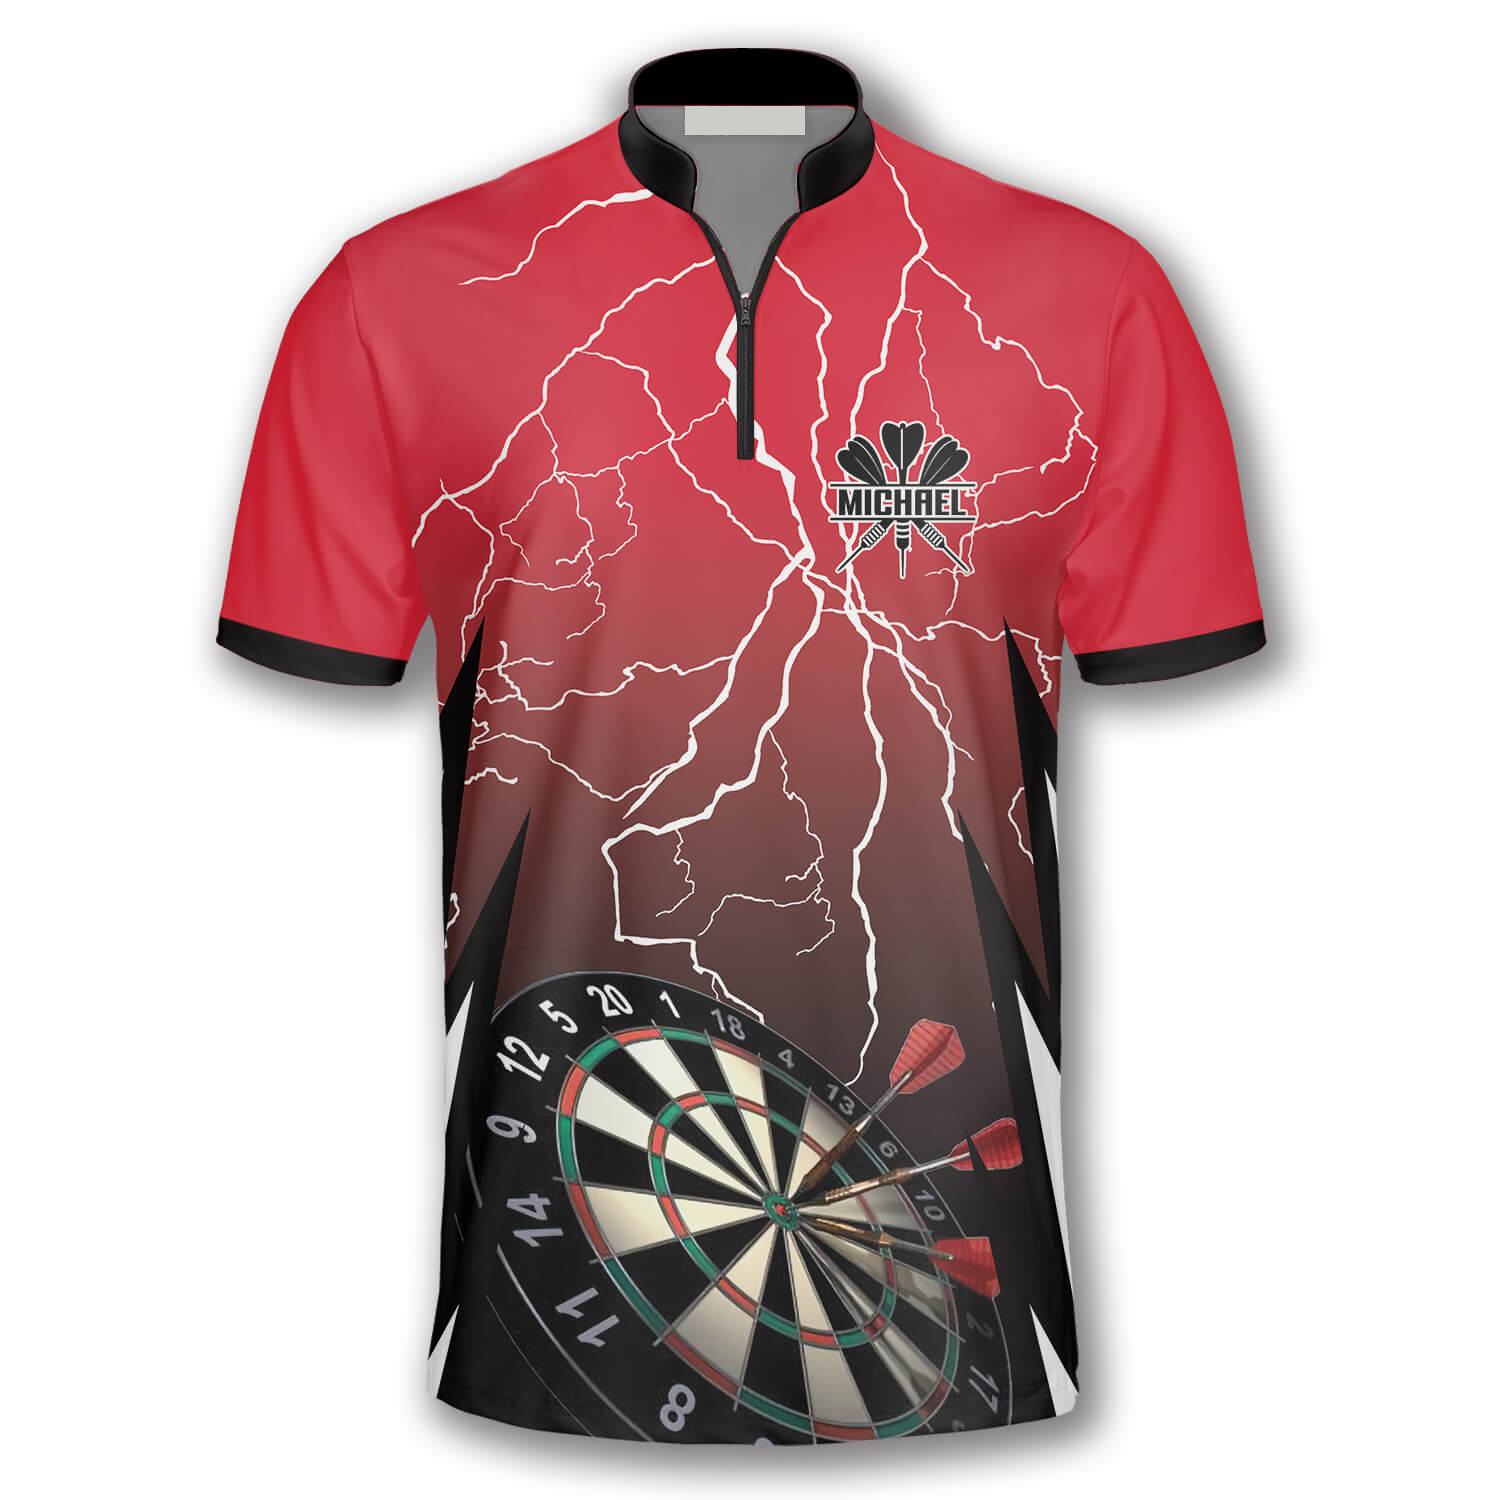 Red Storm Custom Darts Jerseys for Men/ Dartboard Pattern 3D Shirt